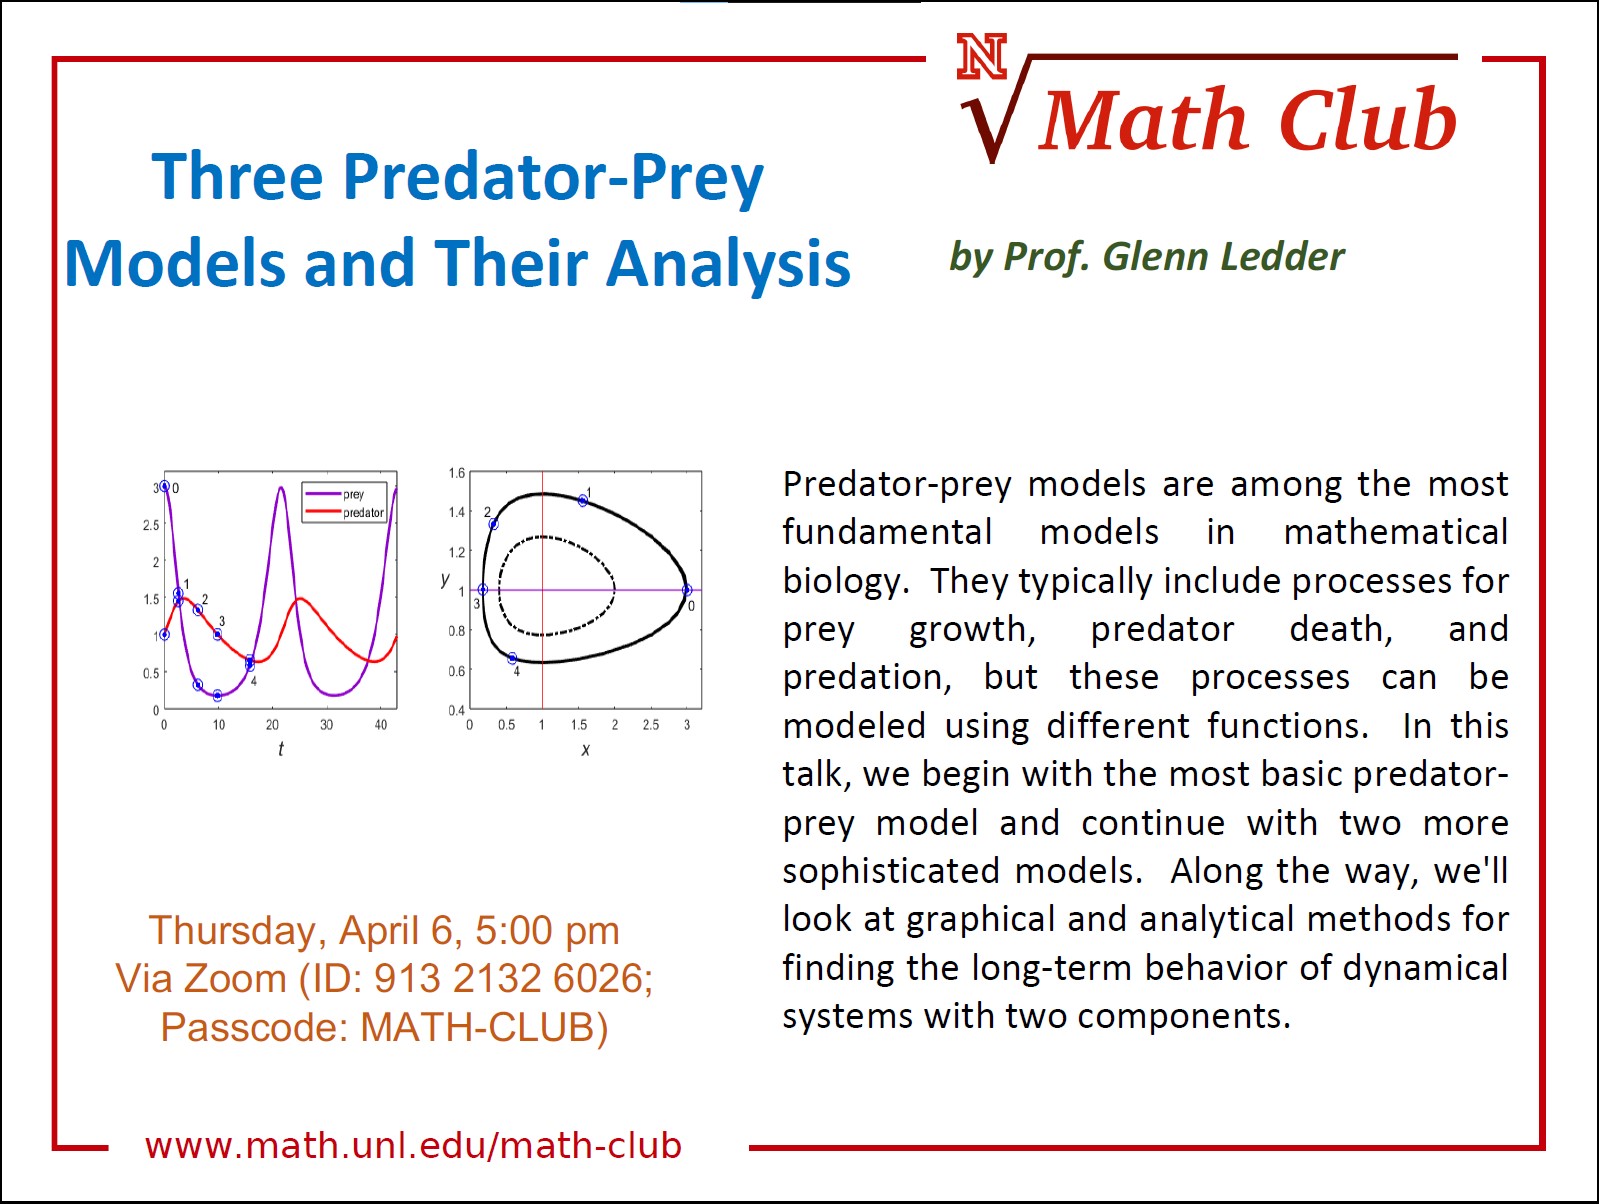 Math Club: Three Predator-Prey Models and Their Analysis